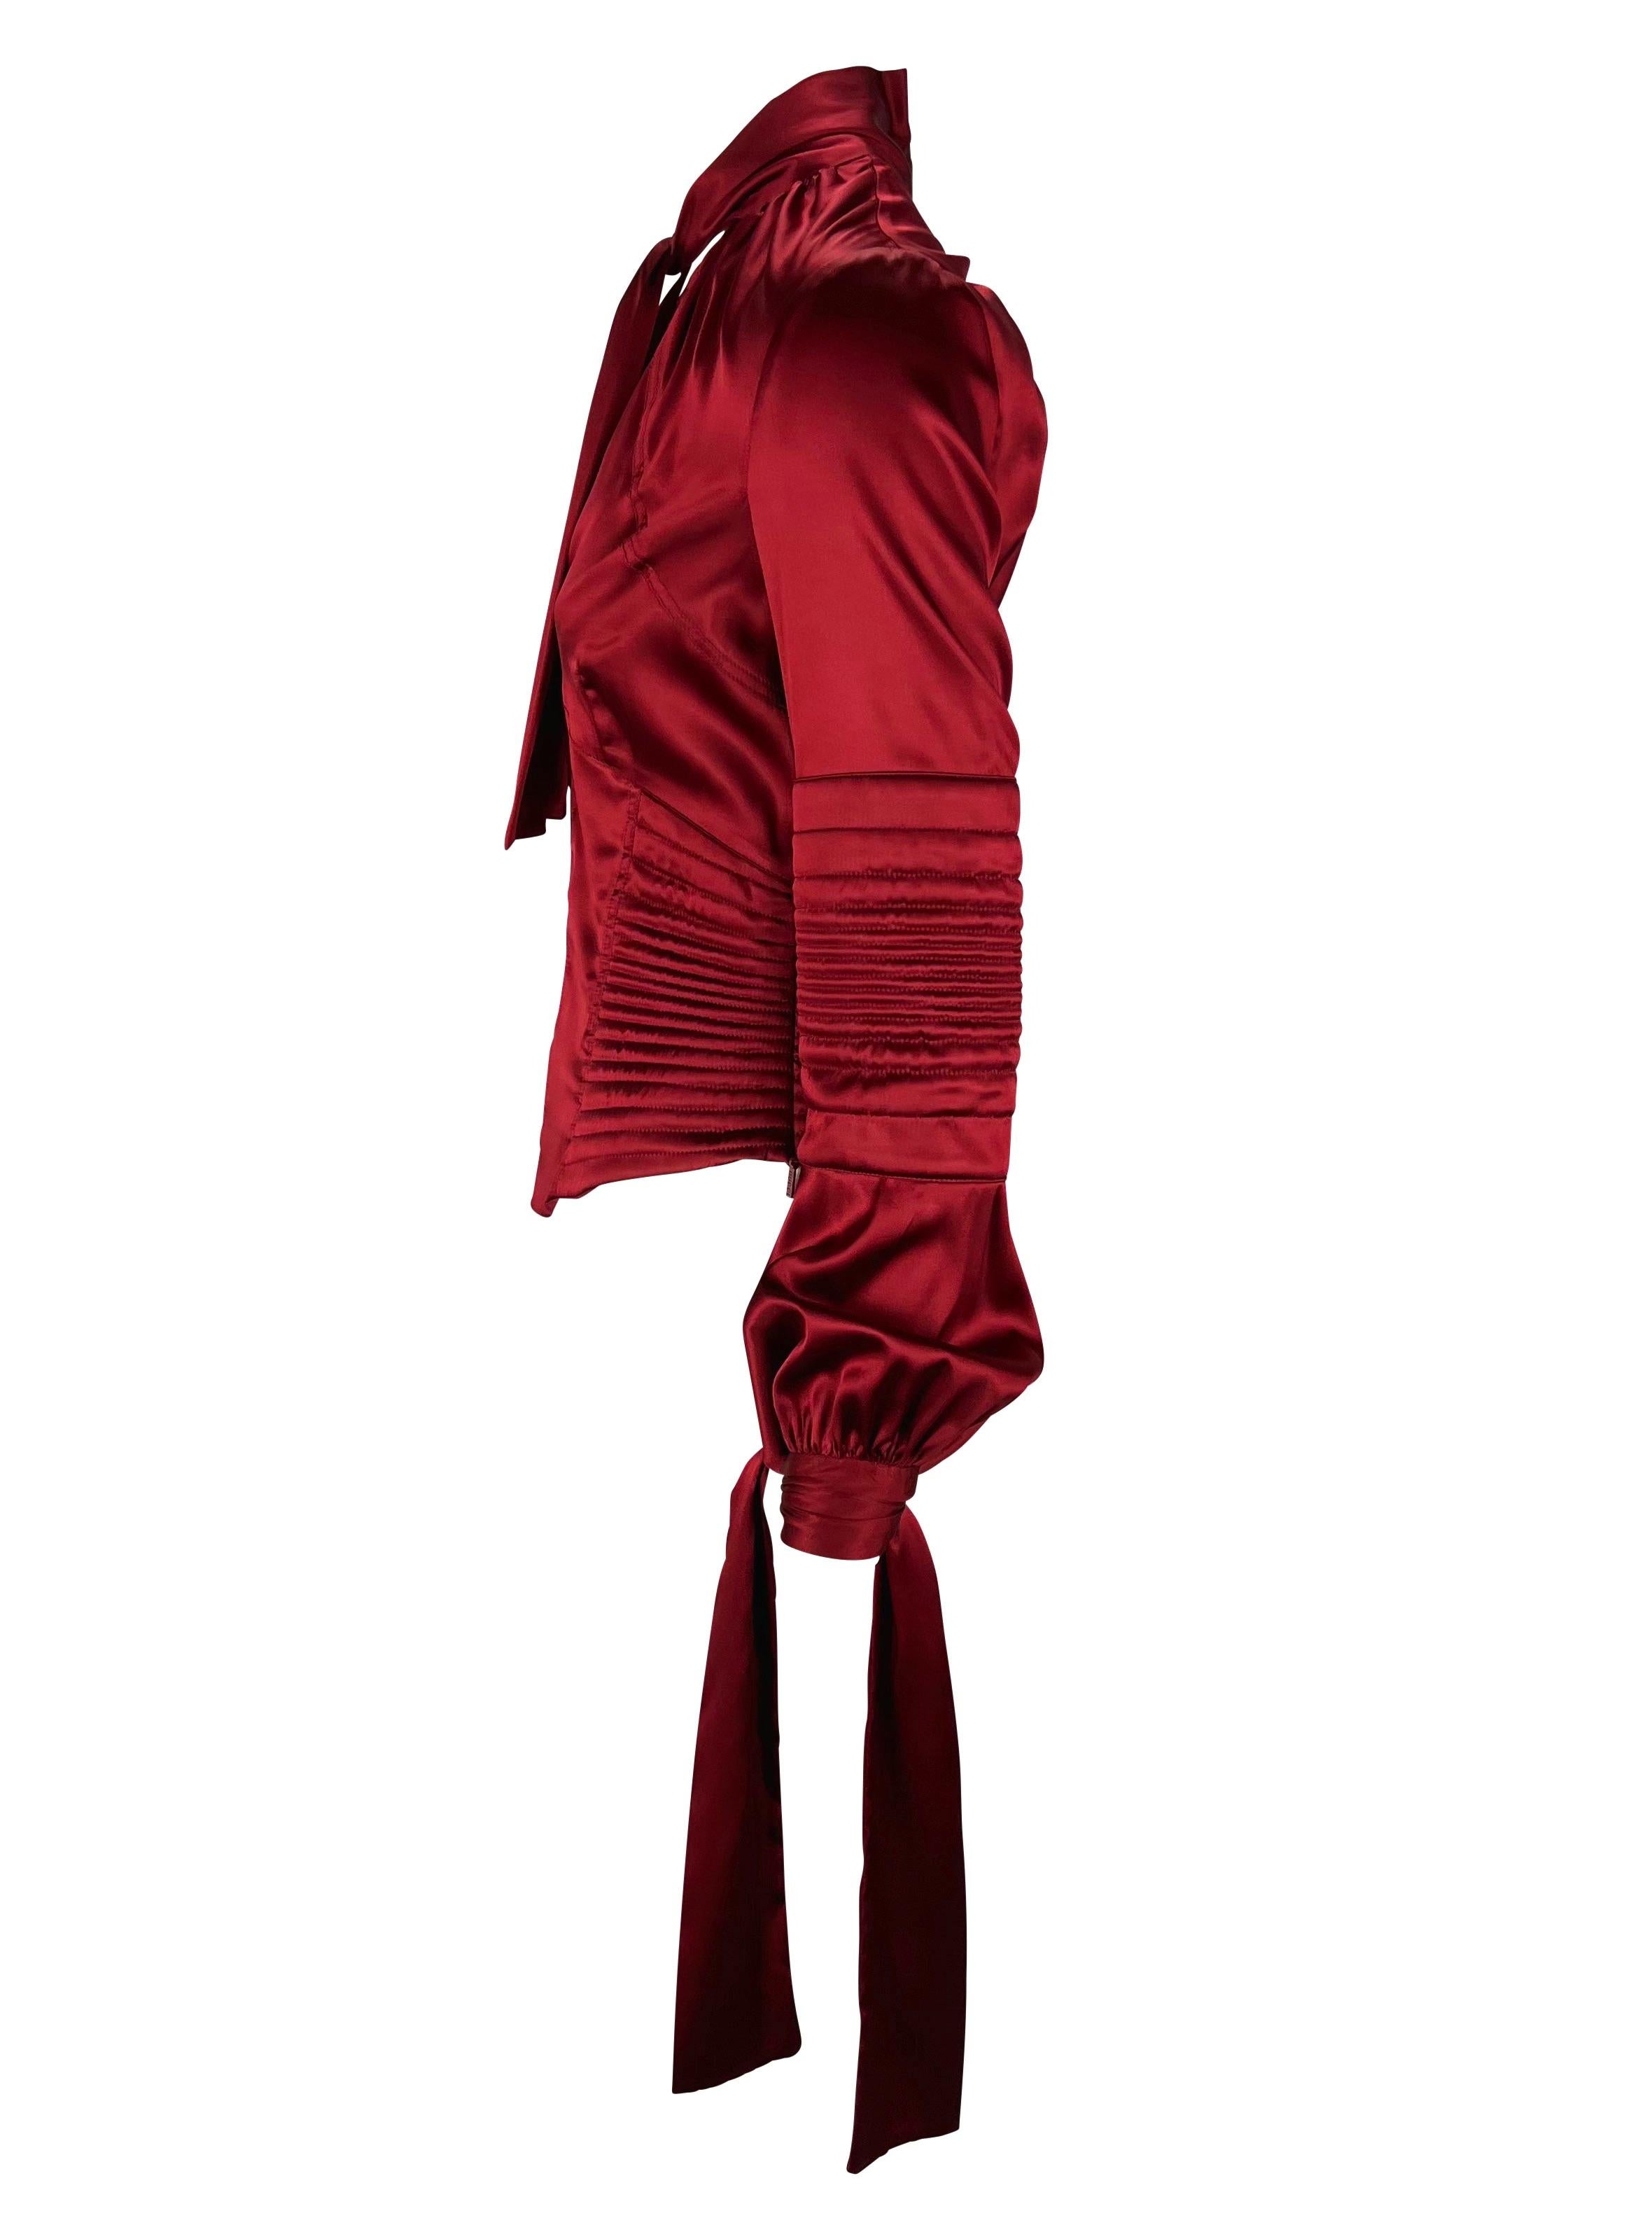 NEU H/W 2003 Gucci by Tom Ford Tiefrote gesteppte Korsett-Krawattenbluse aus Stretch-Satin, neu mit Etikett (Rot) im Angebot